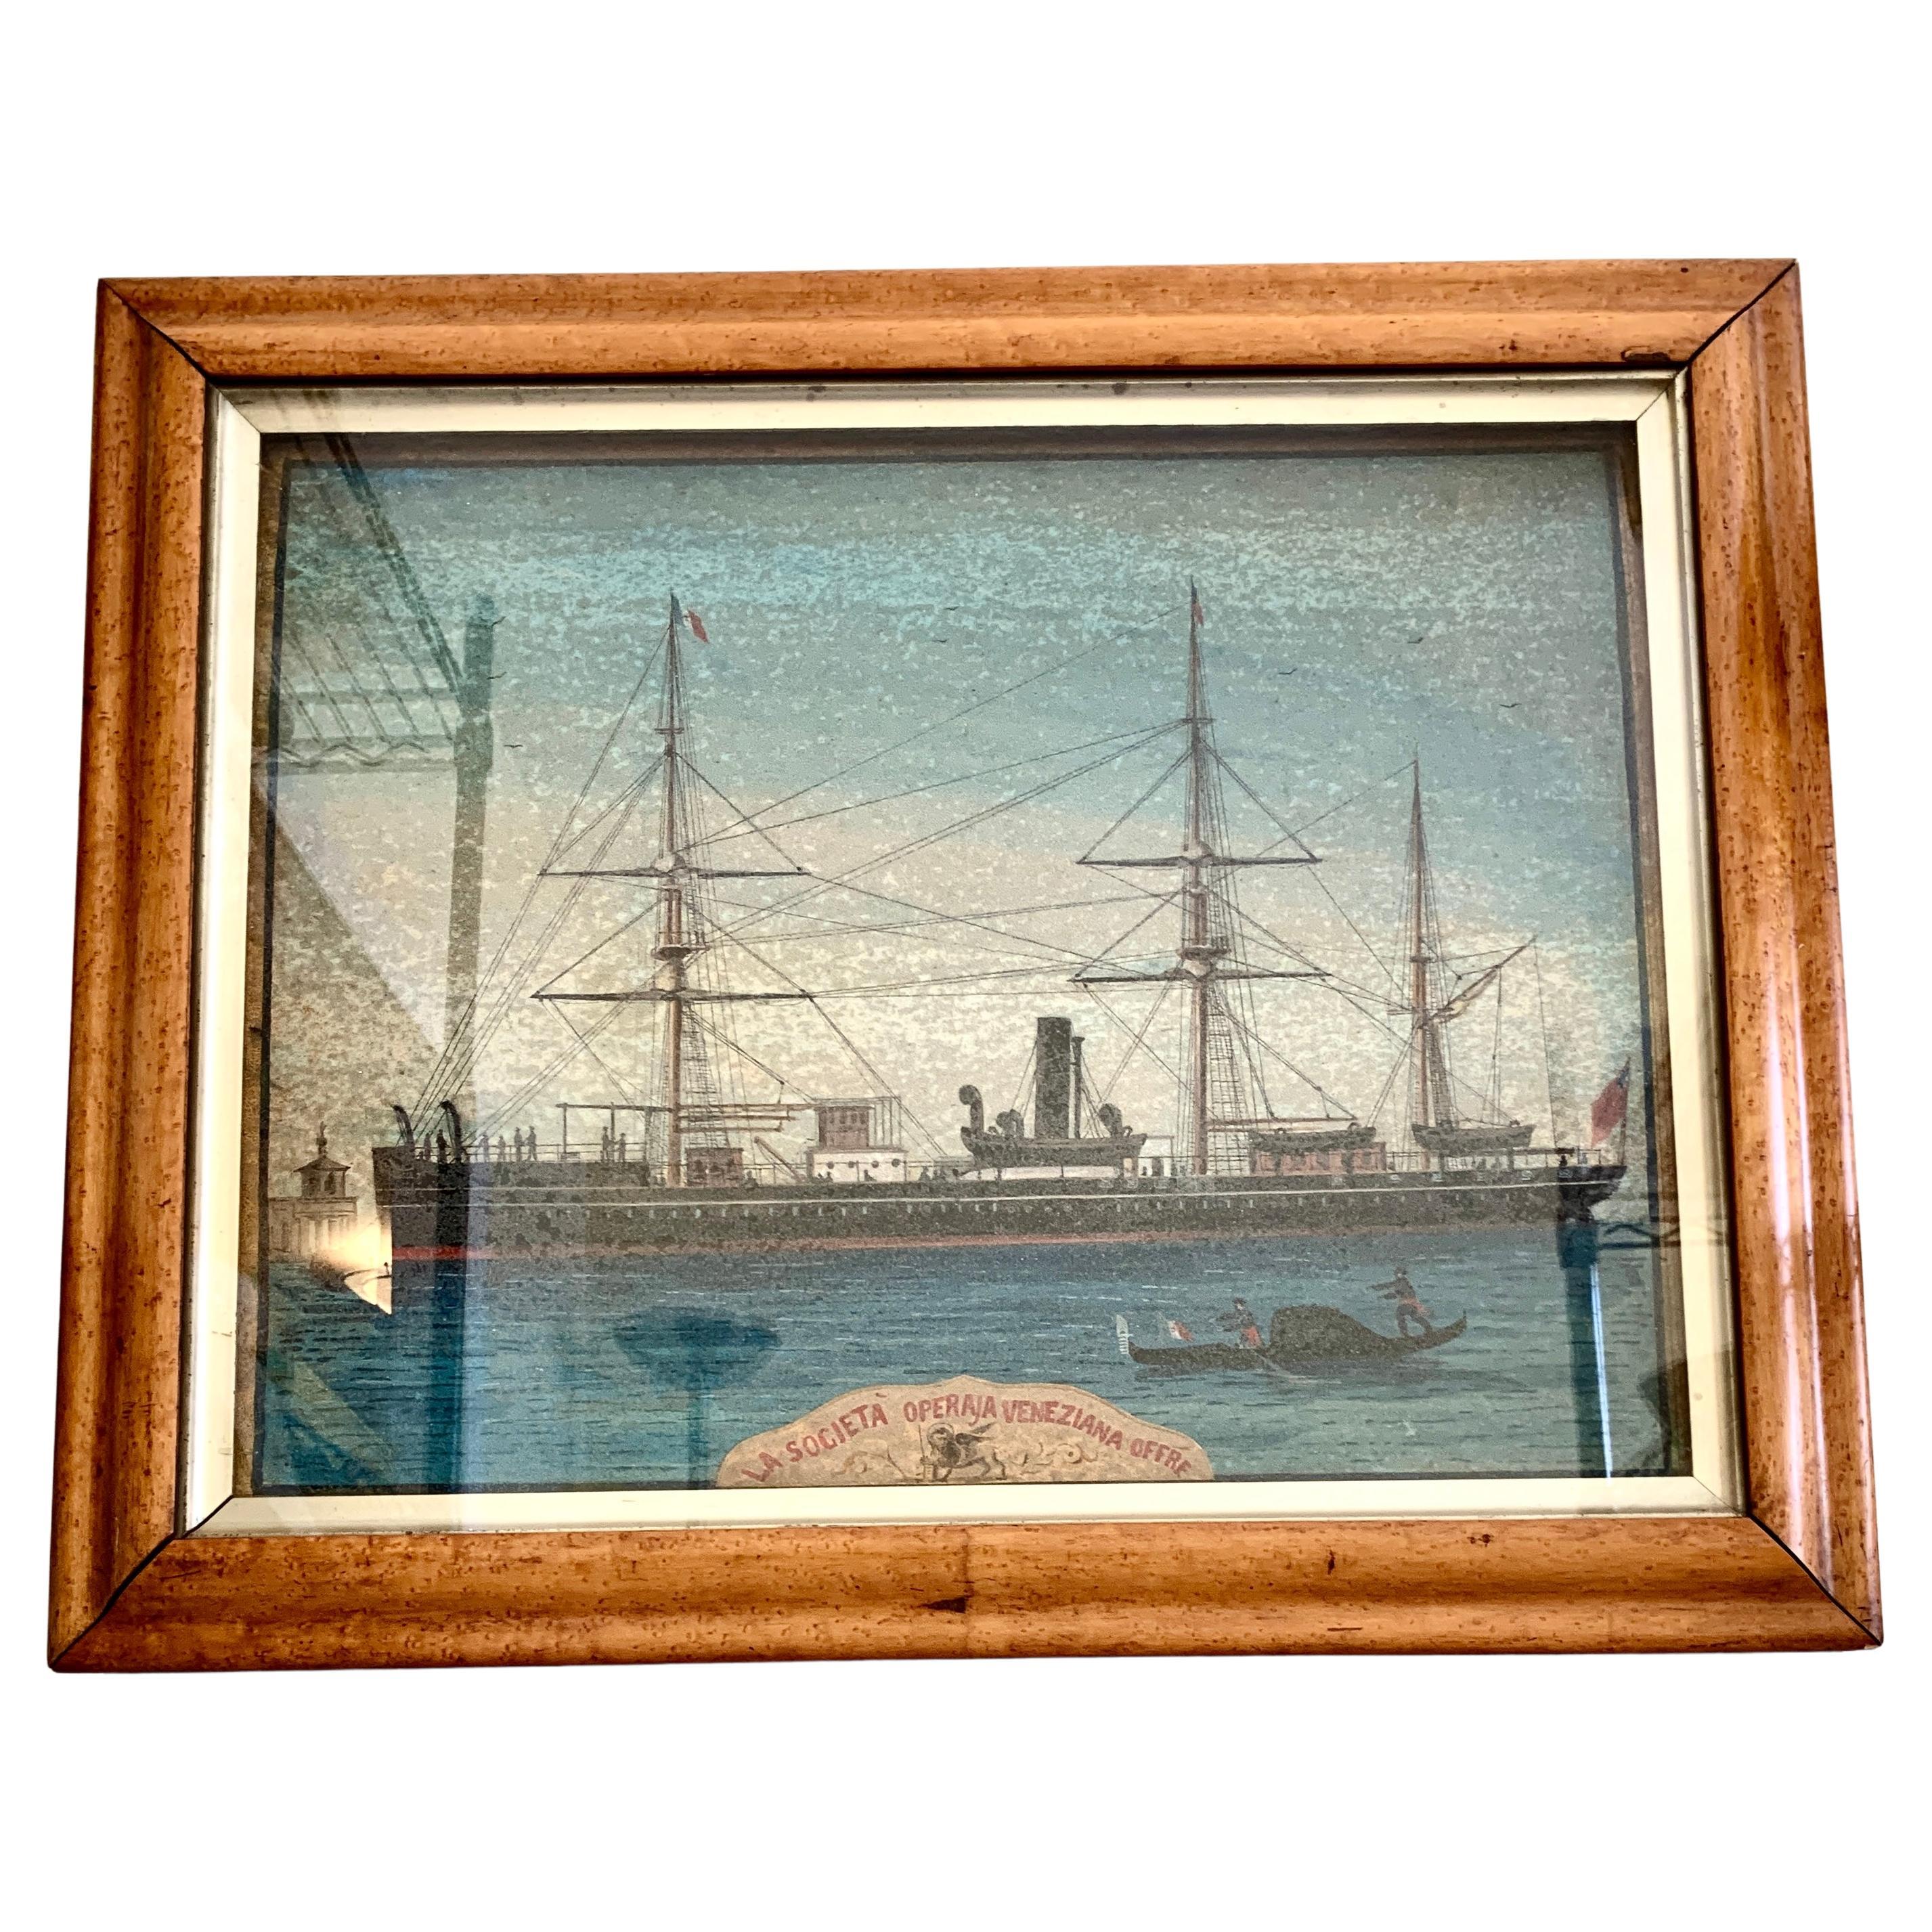 Großes italienisches Gemälde eines Handelsschiffes, „The Venetian Workers' Society Offers“